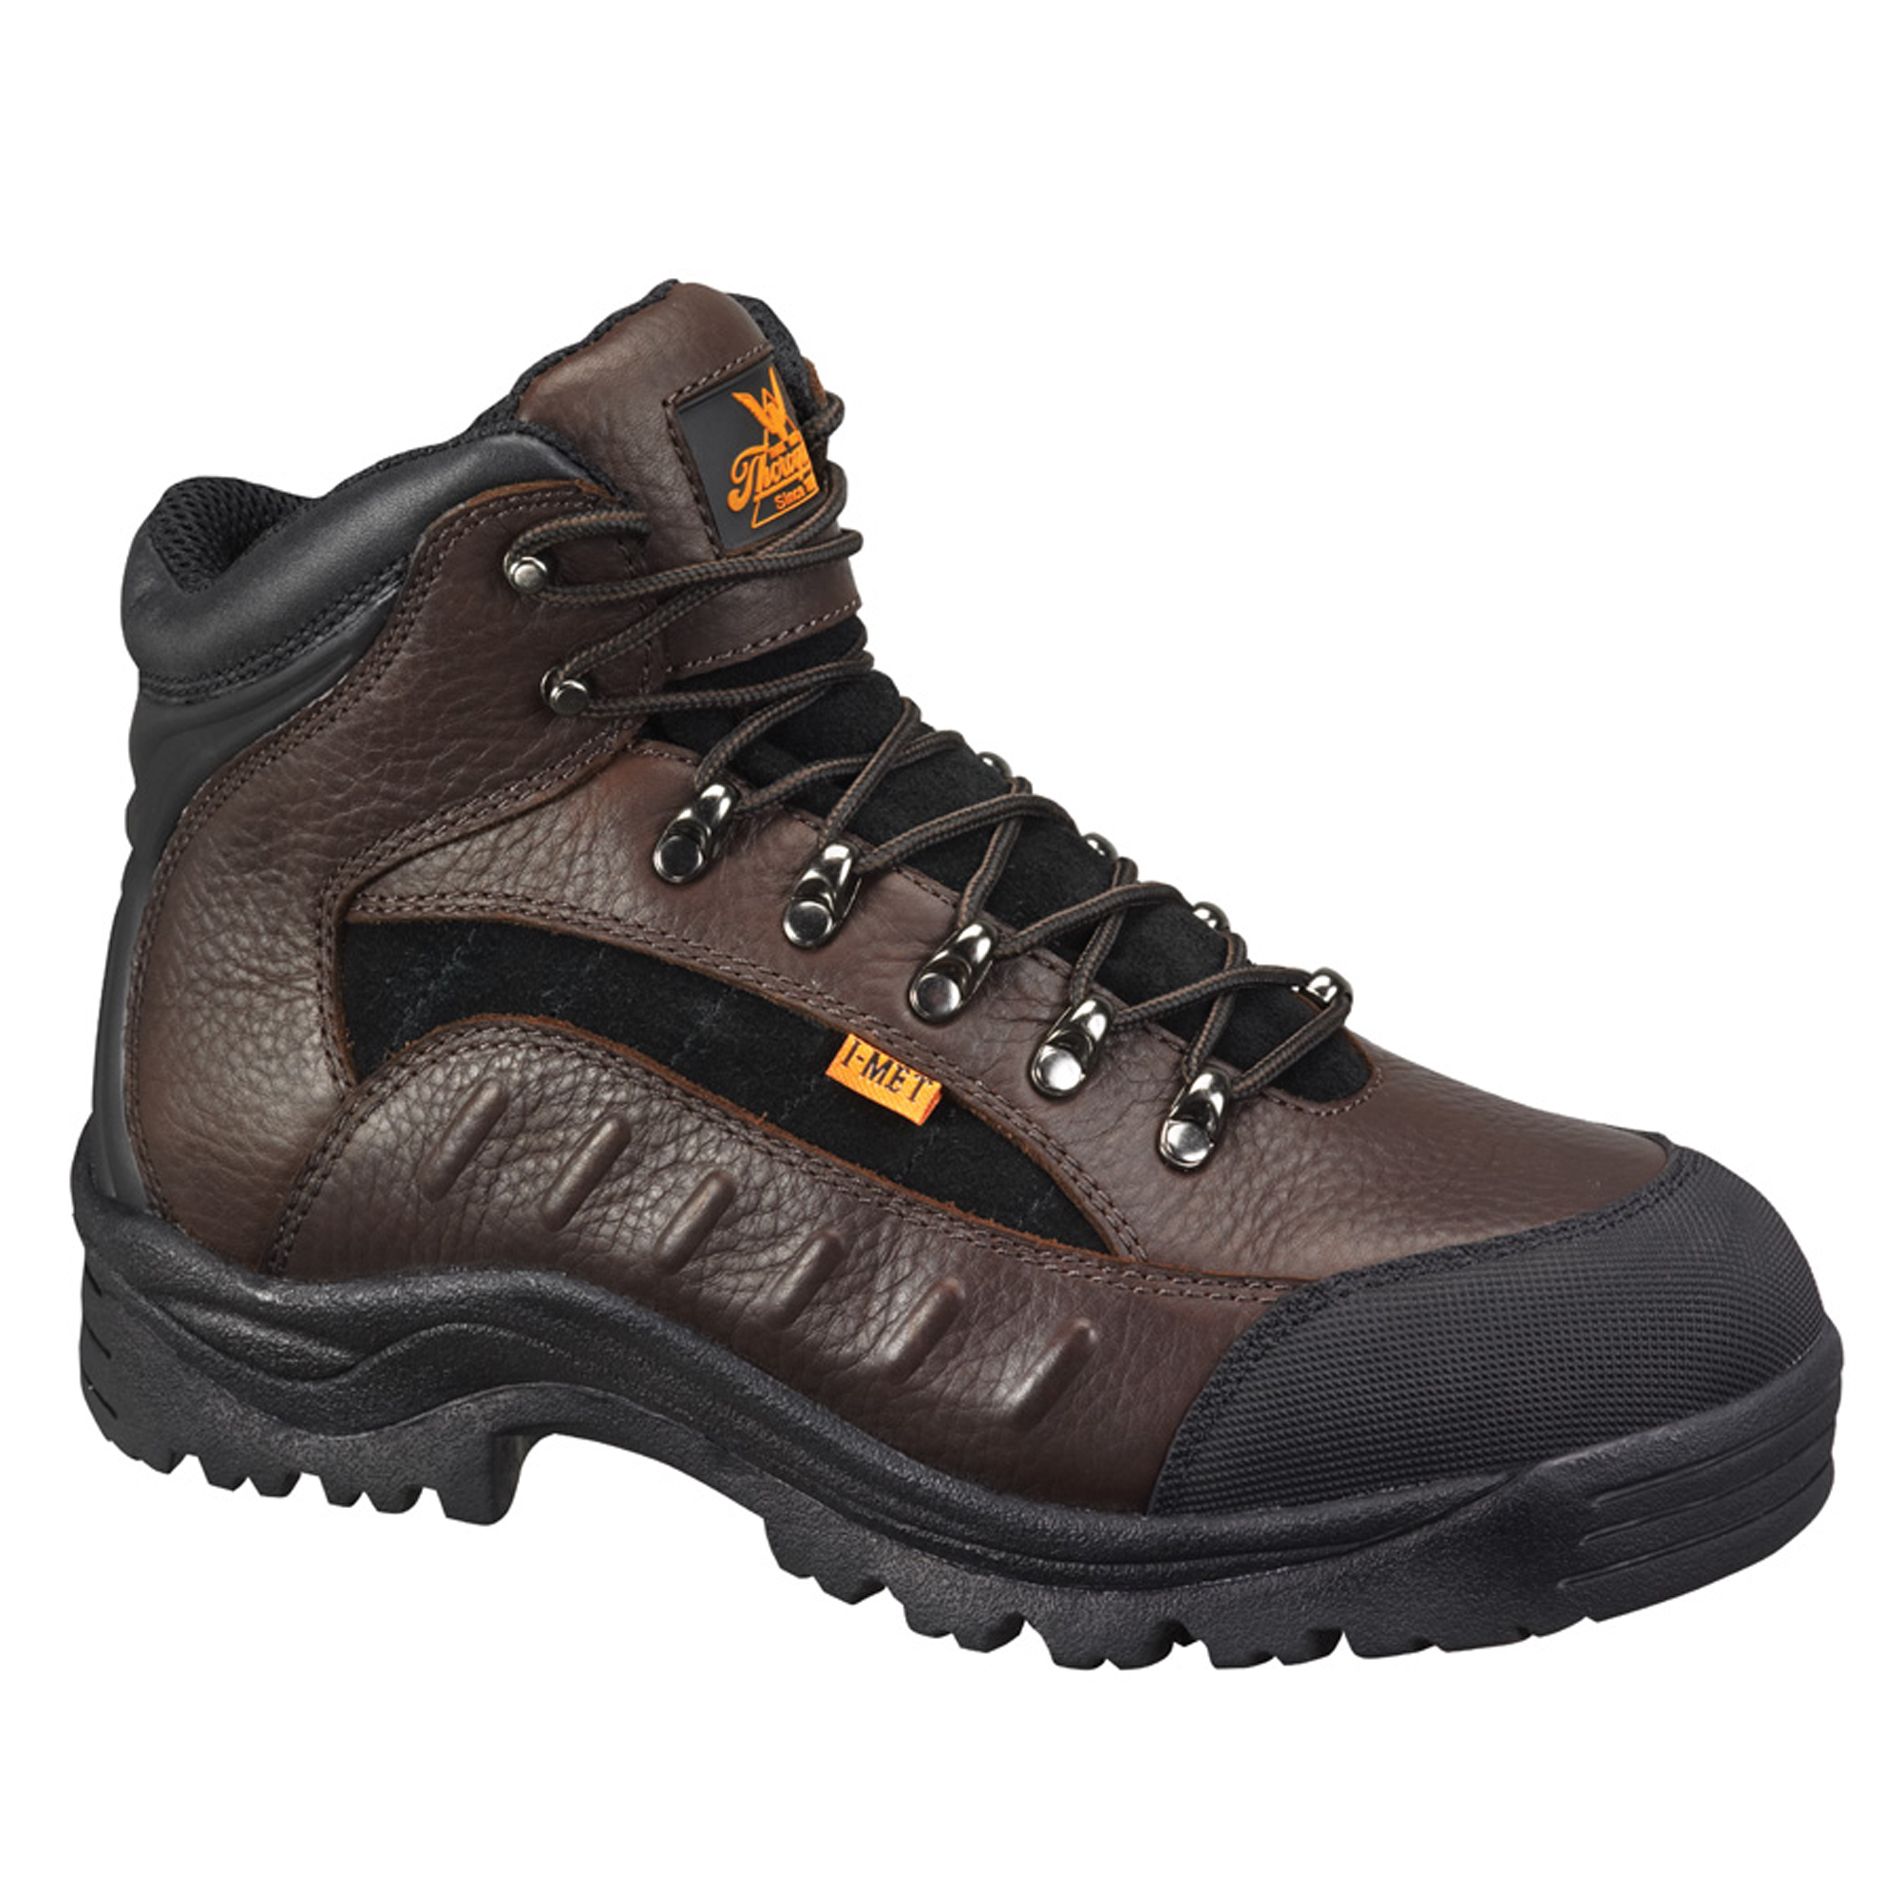 Thorogood Men's I-Met Guard 804-4312 Dark Brown Steel Toe Work Boots - Wide Width Available